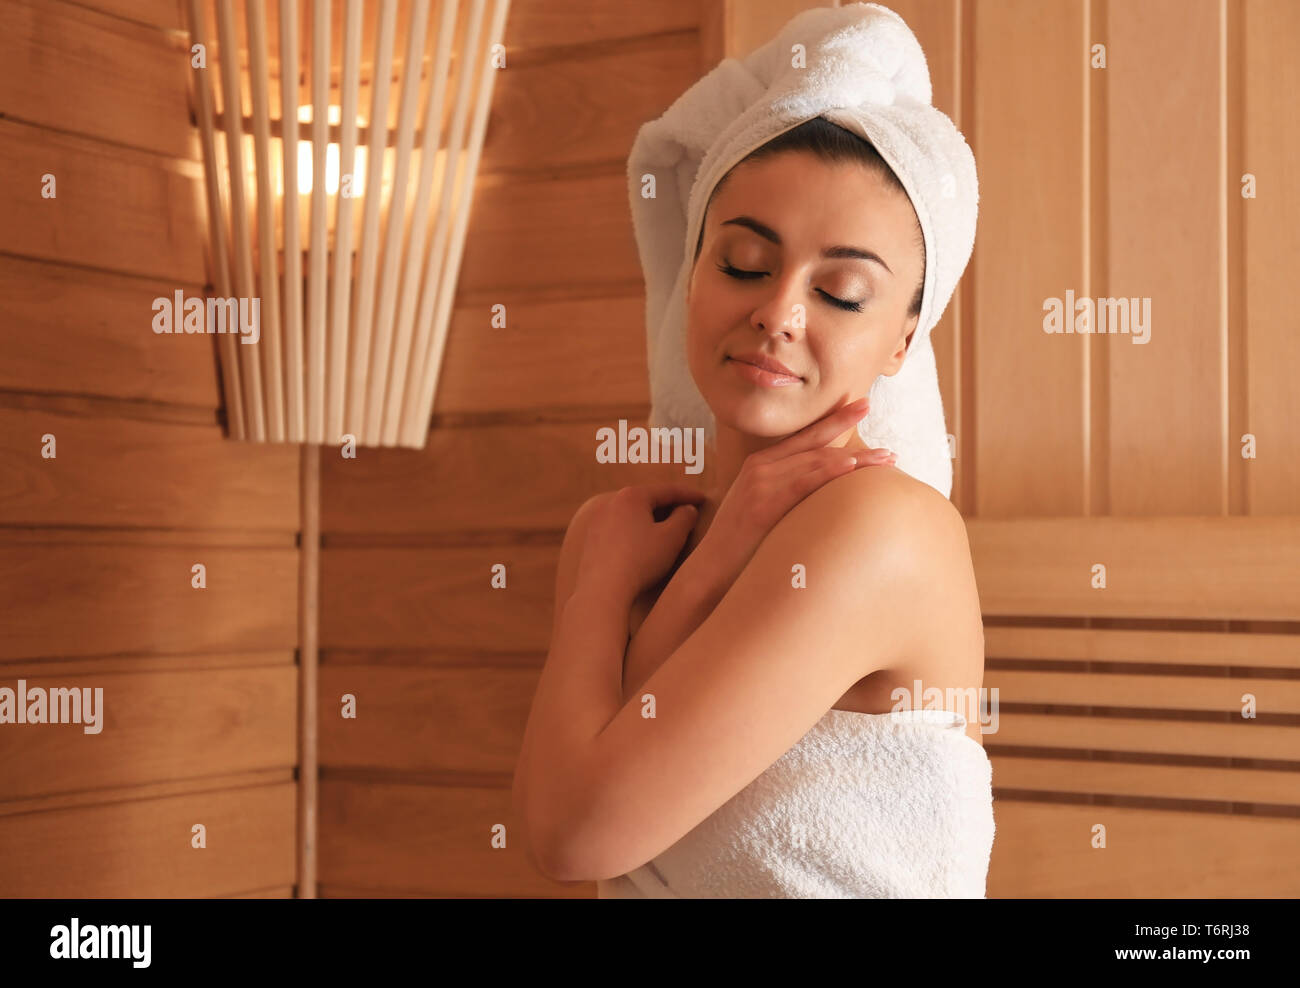 https://c8.alamy.com/comp/T6RJ38/young-woman-relaxing-in-sauna-T6RJ38.jpg